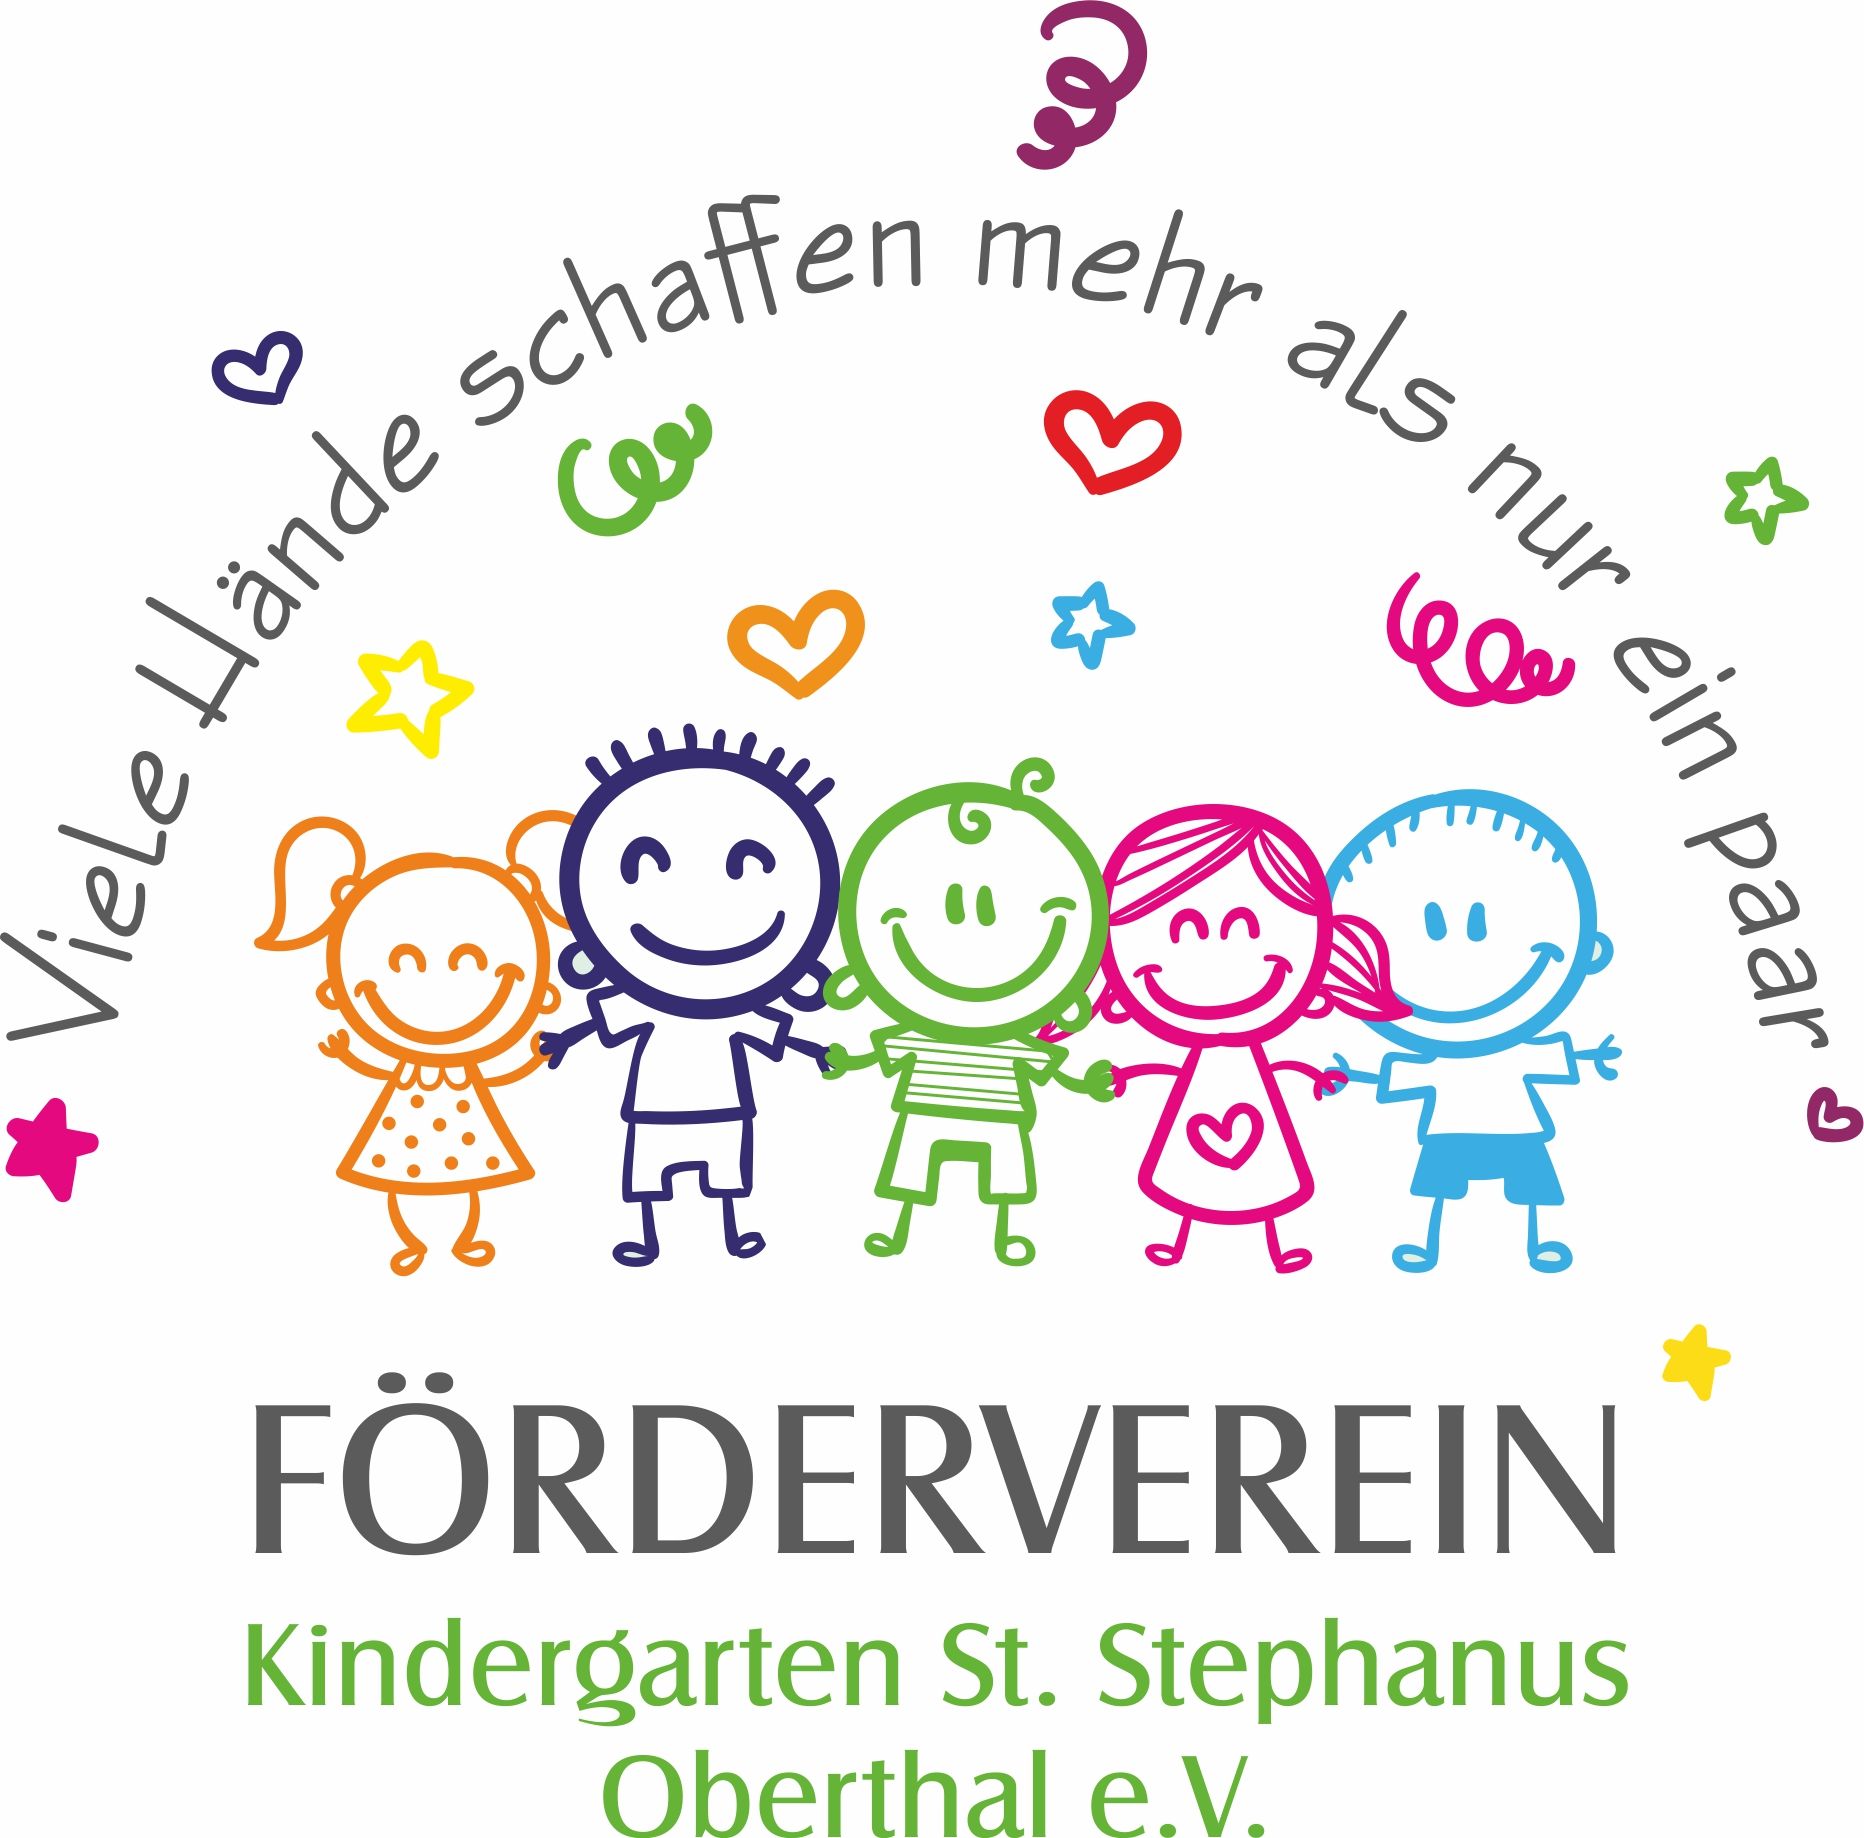 Profilbild des Vereins Förderverein Kindergarten St. Stephanus Oberthal e.V..